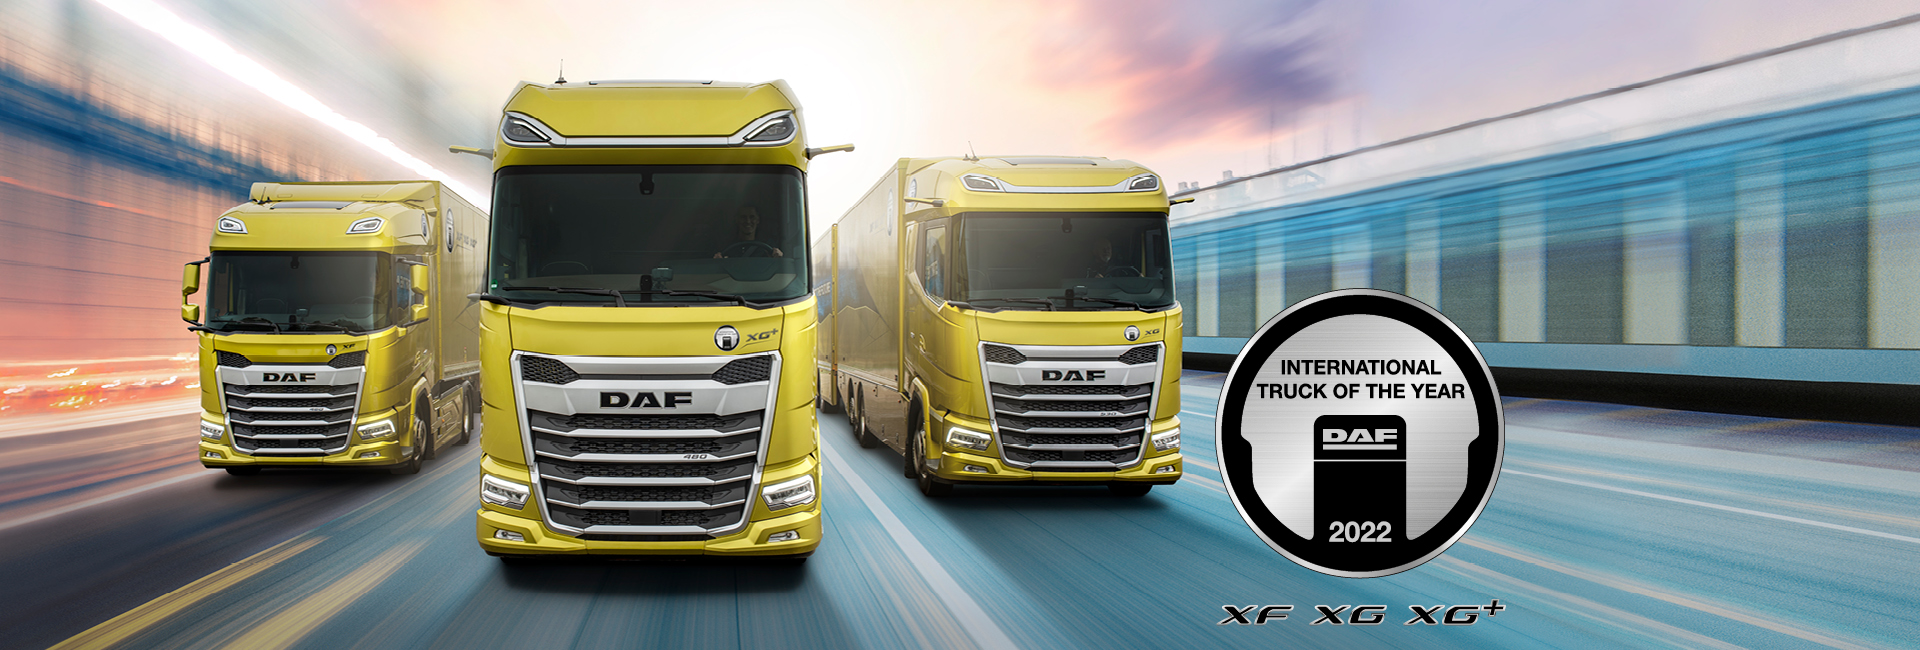 DAF wins International Truck of the Year 2022